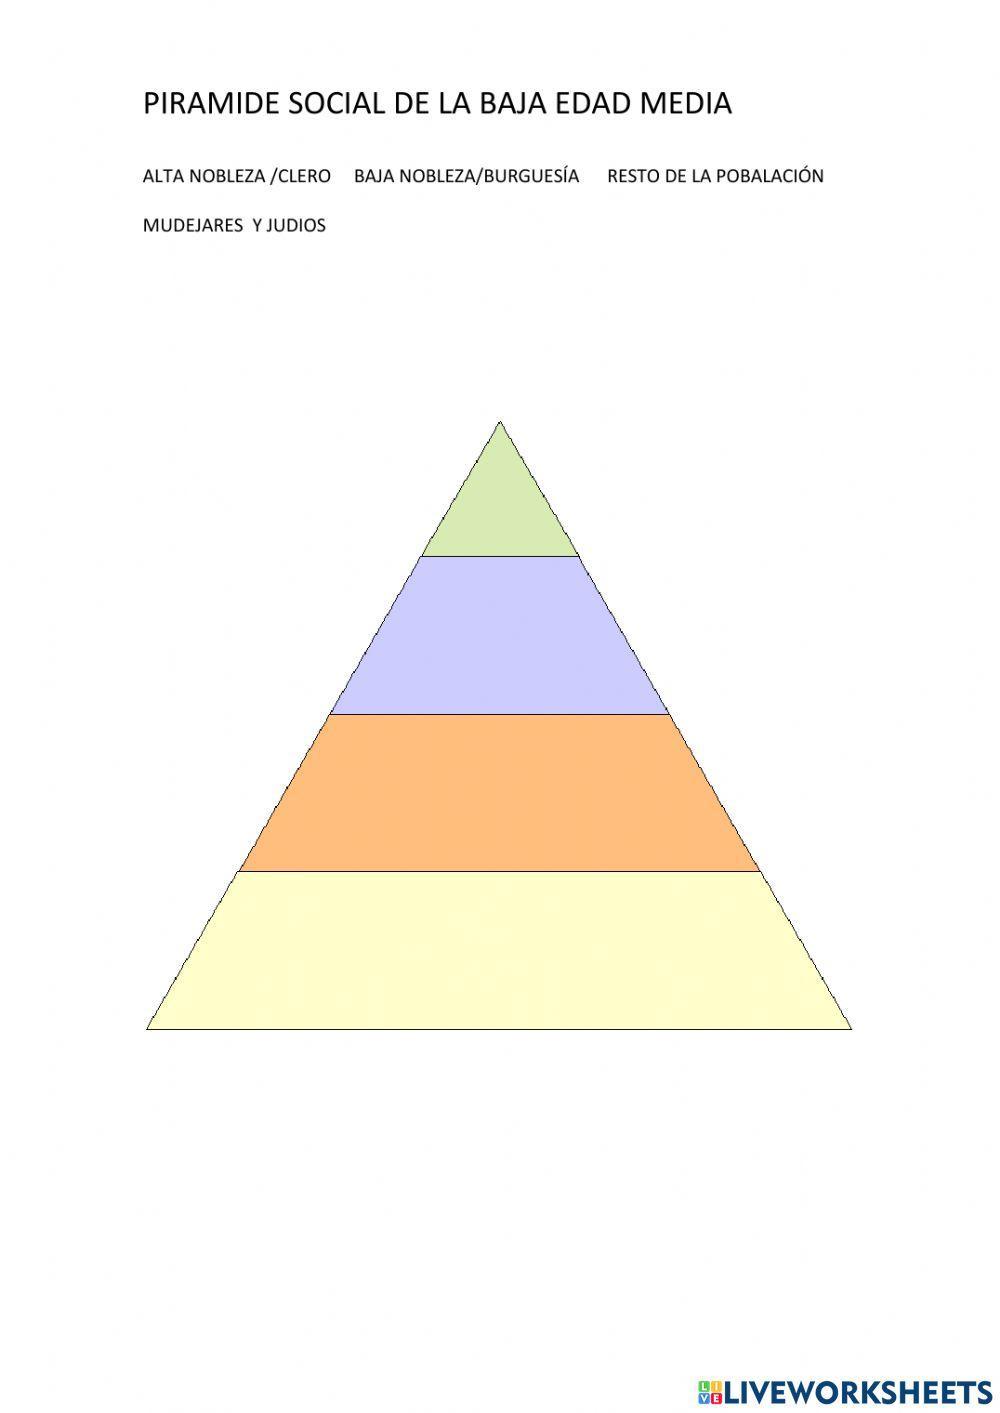 Piramide baja edad media